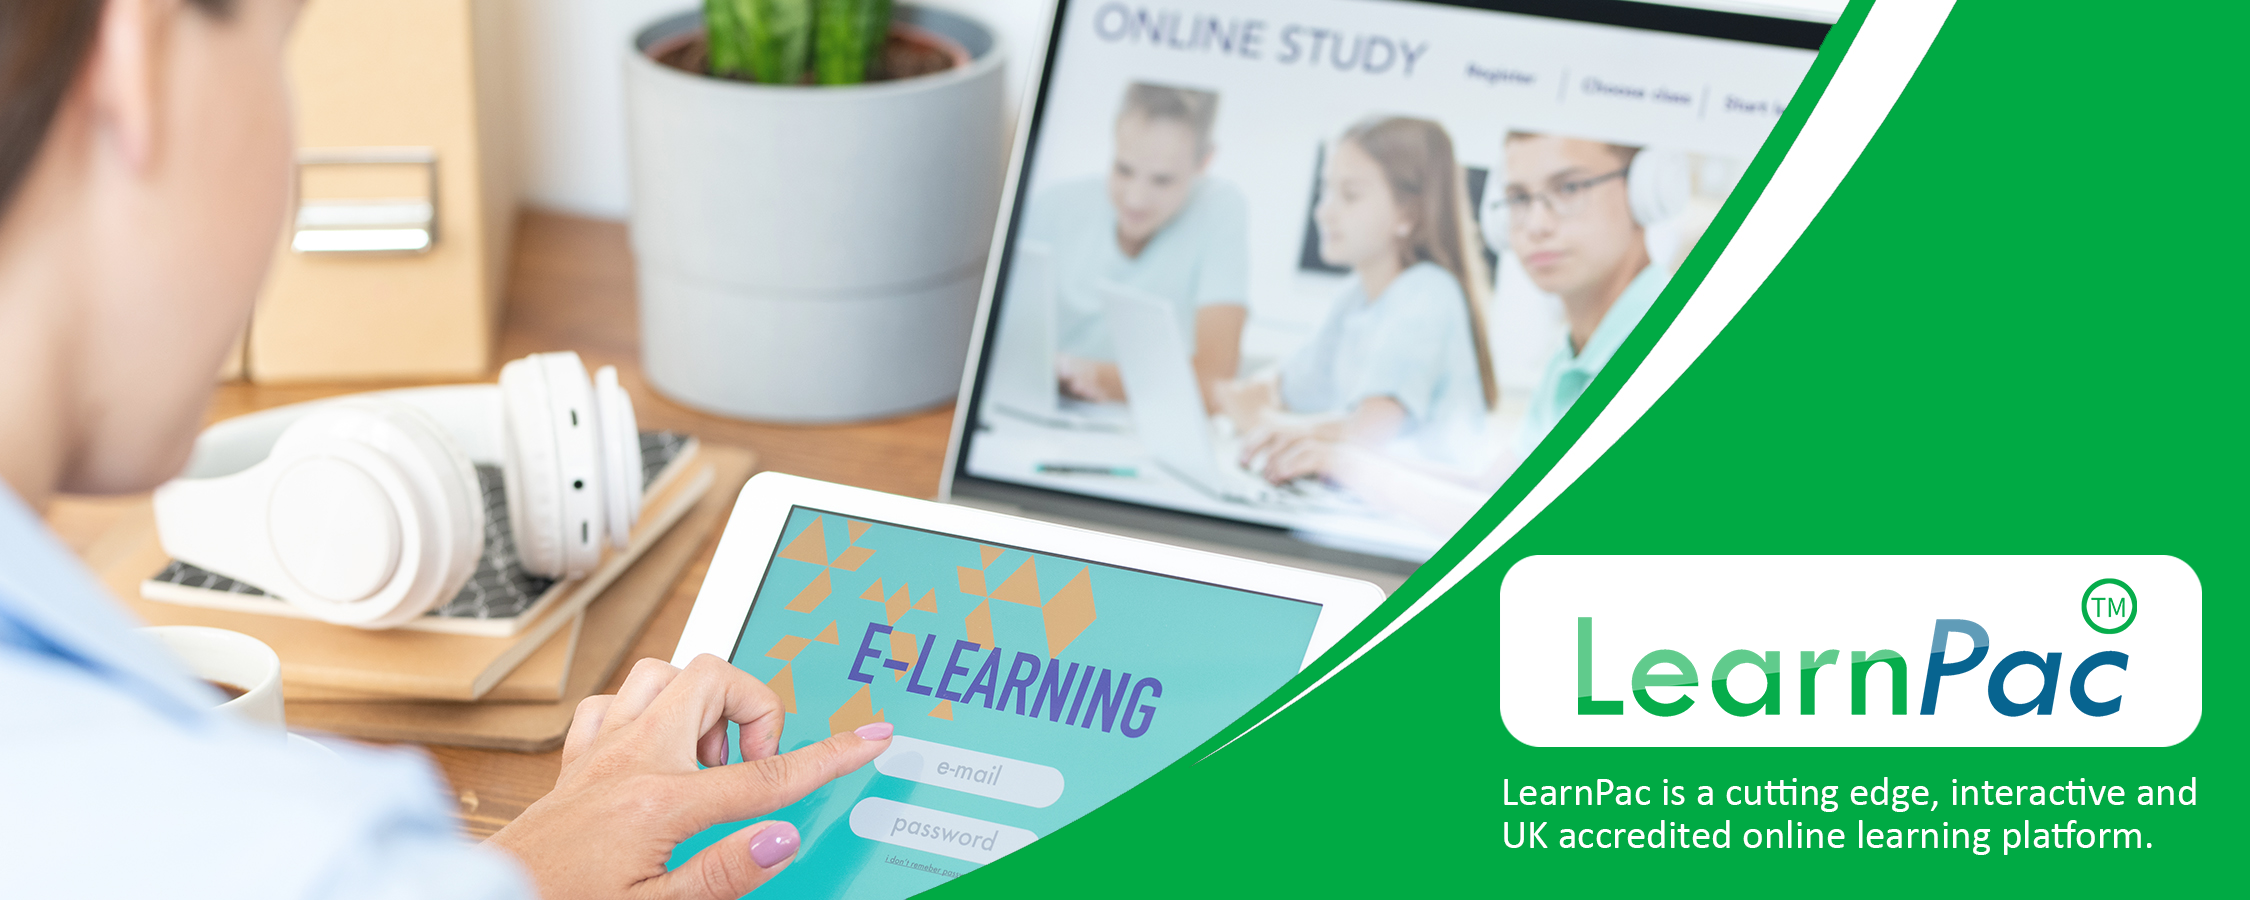 Public Speaking Training - Online Learning Courses - E-Learning Courses - LearnPac Systems UK -